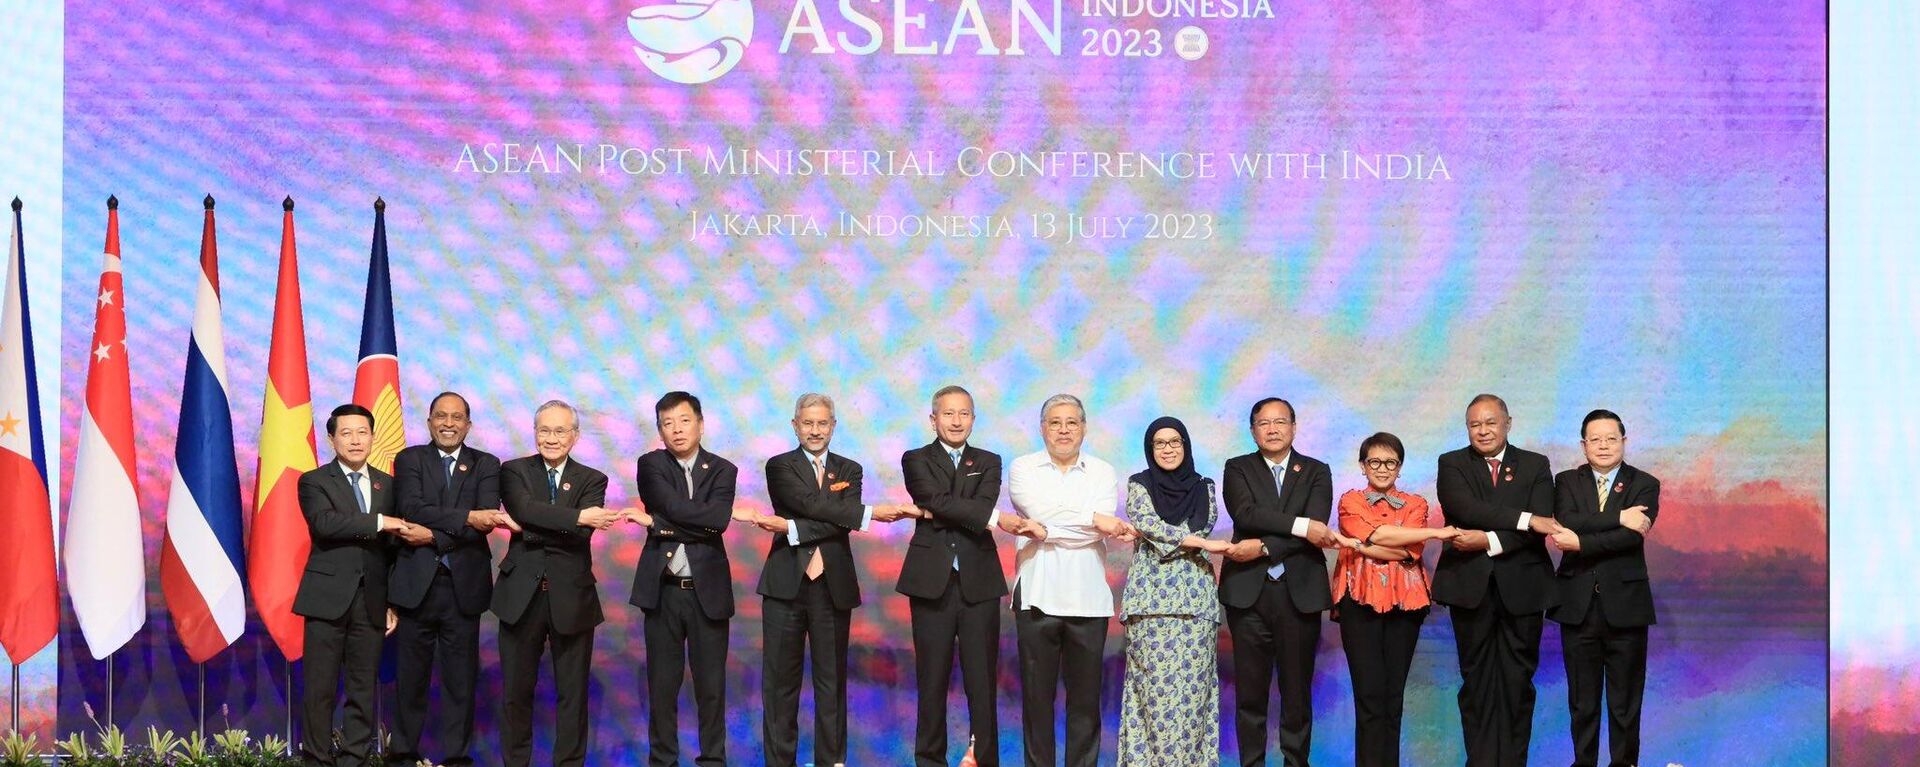 ASEAN summit Jakarta 2023 - Sputnik India, 1920, 01.08.2023